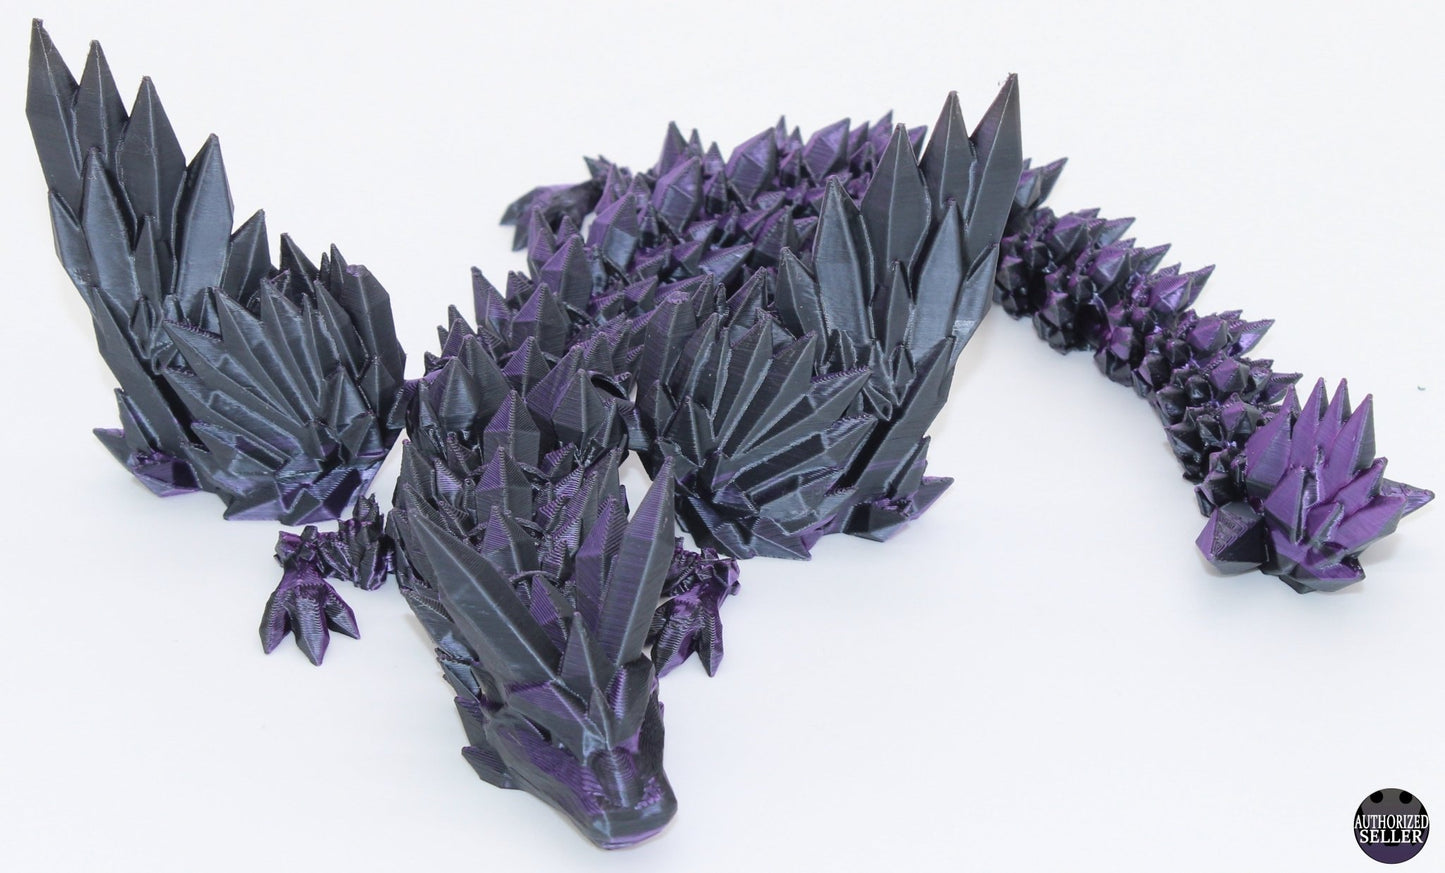 Crystal Dragon Fidget Toy - Articulated Crystal Dragon - 3D Printed Dragon  - Sensory Stress Fidget